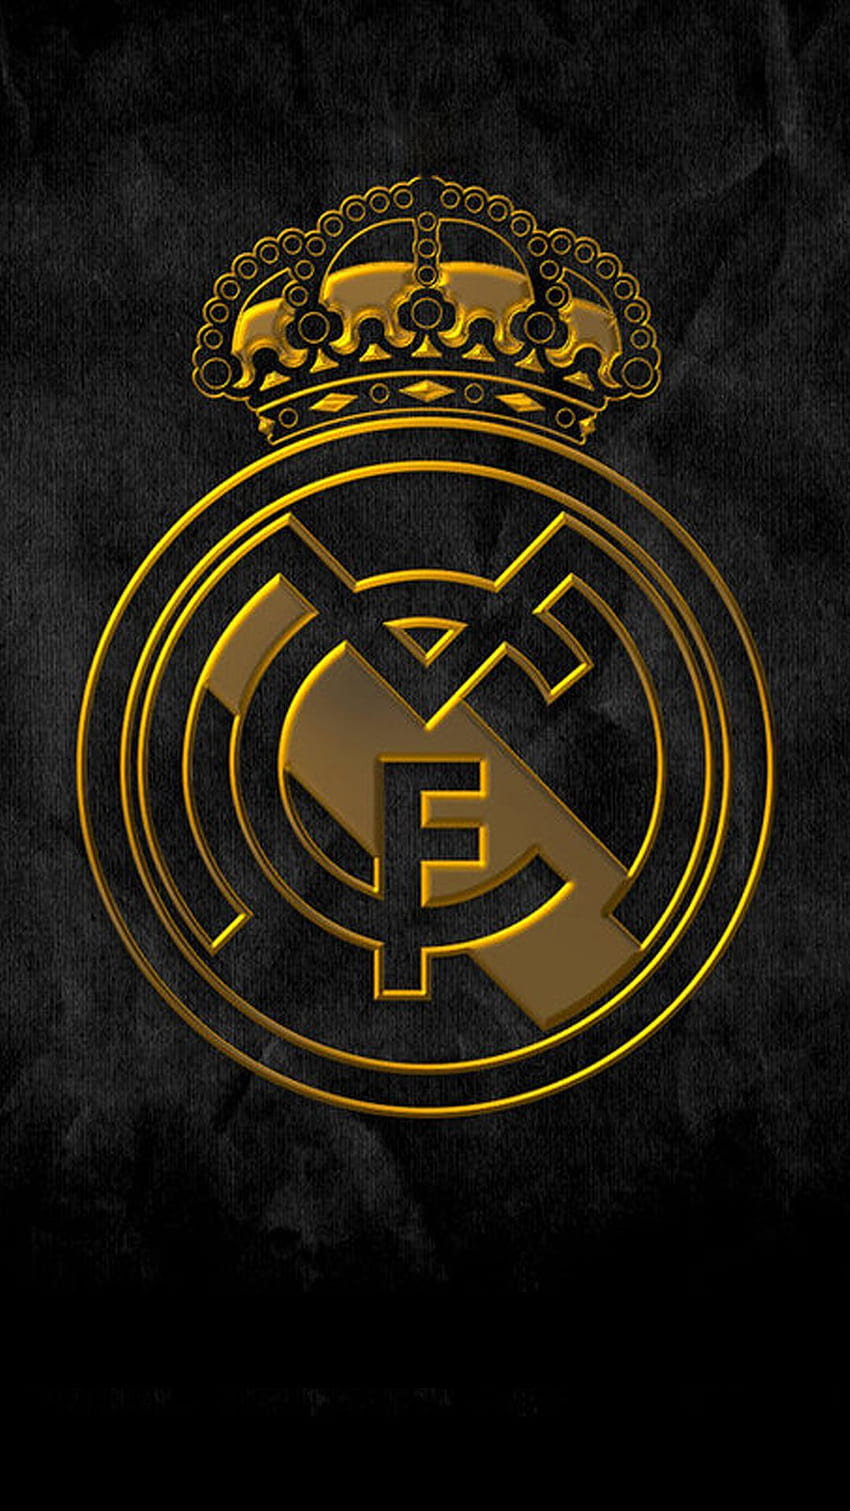 HALA MADRID WE ARE REAL, HALA MADRID WE ARE REAL, HALA MADRID WE ARE REAL. Madrid , Real madrid , Real madrid logo HD phone wallpaper